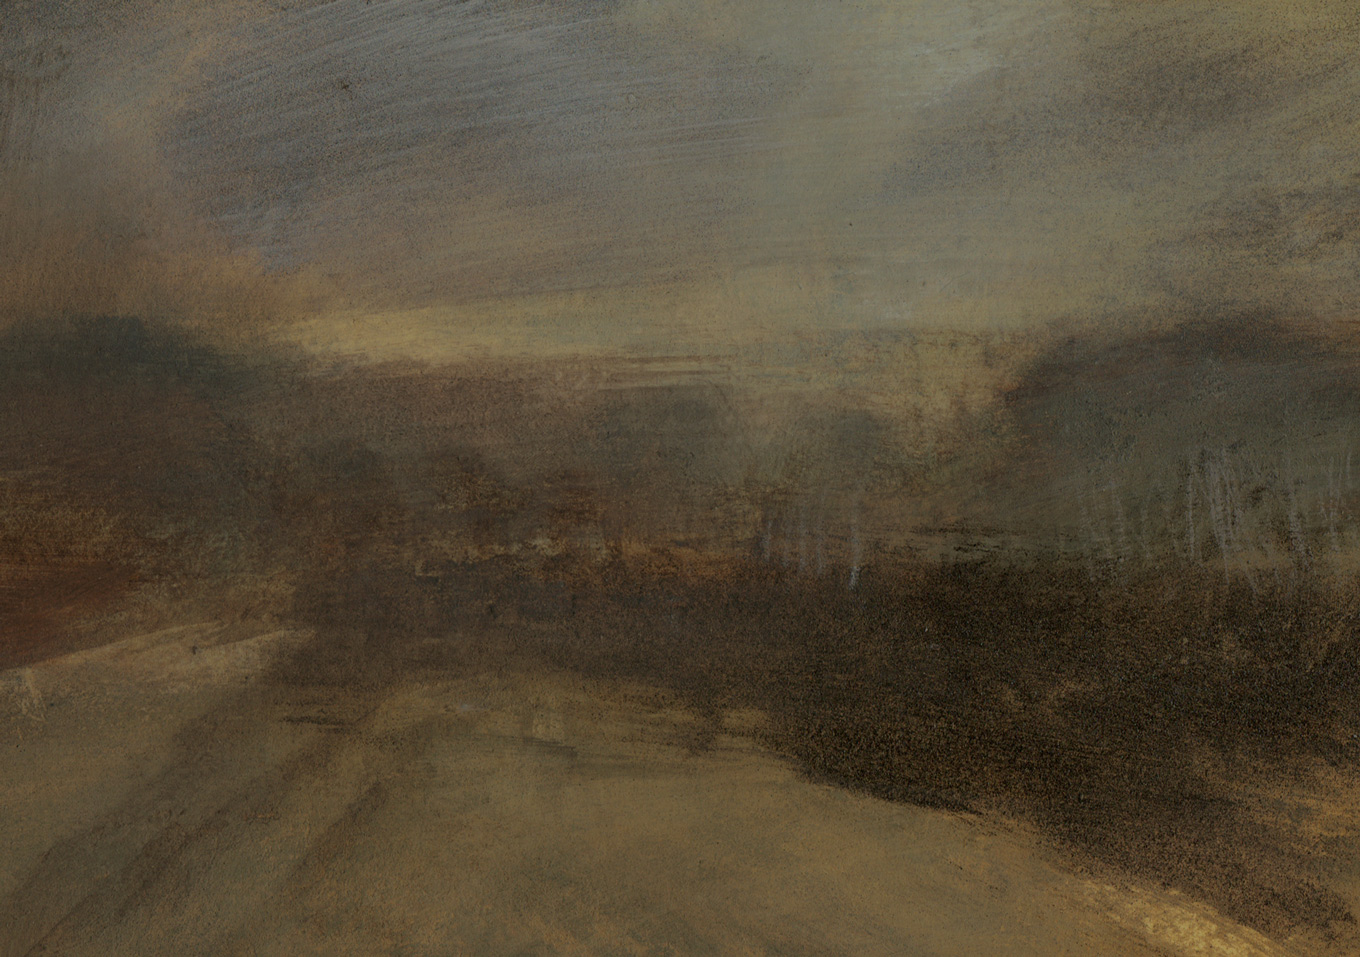 L1035 - Nicholas Herbert, British Artist, contemporary mixed media landscape painting of a view across a cornfield towards a low wooded escarpment